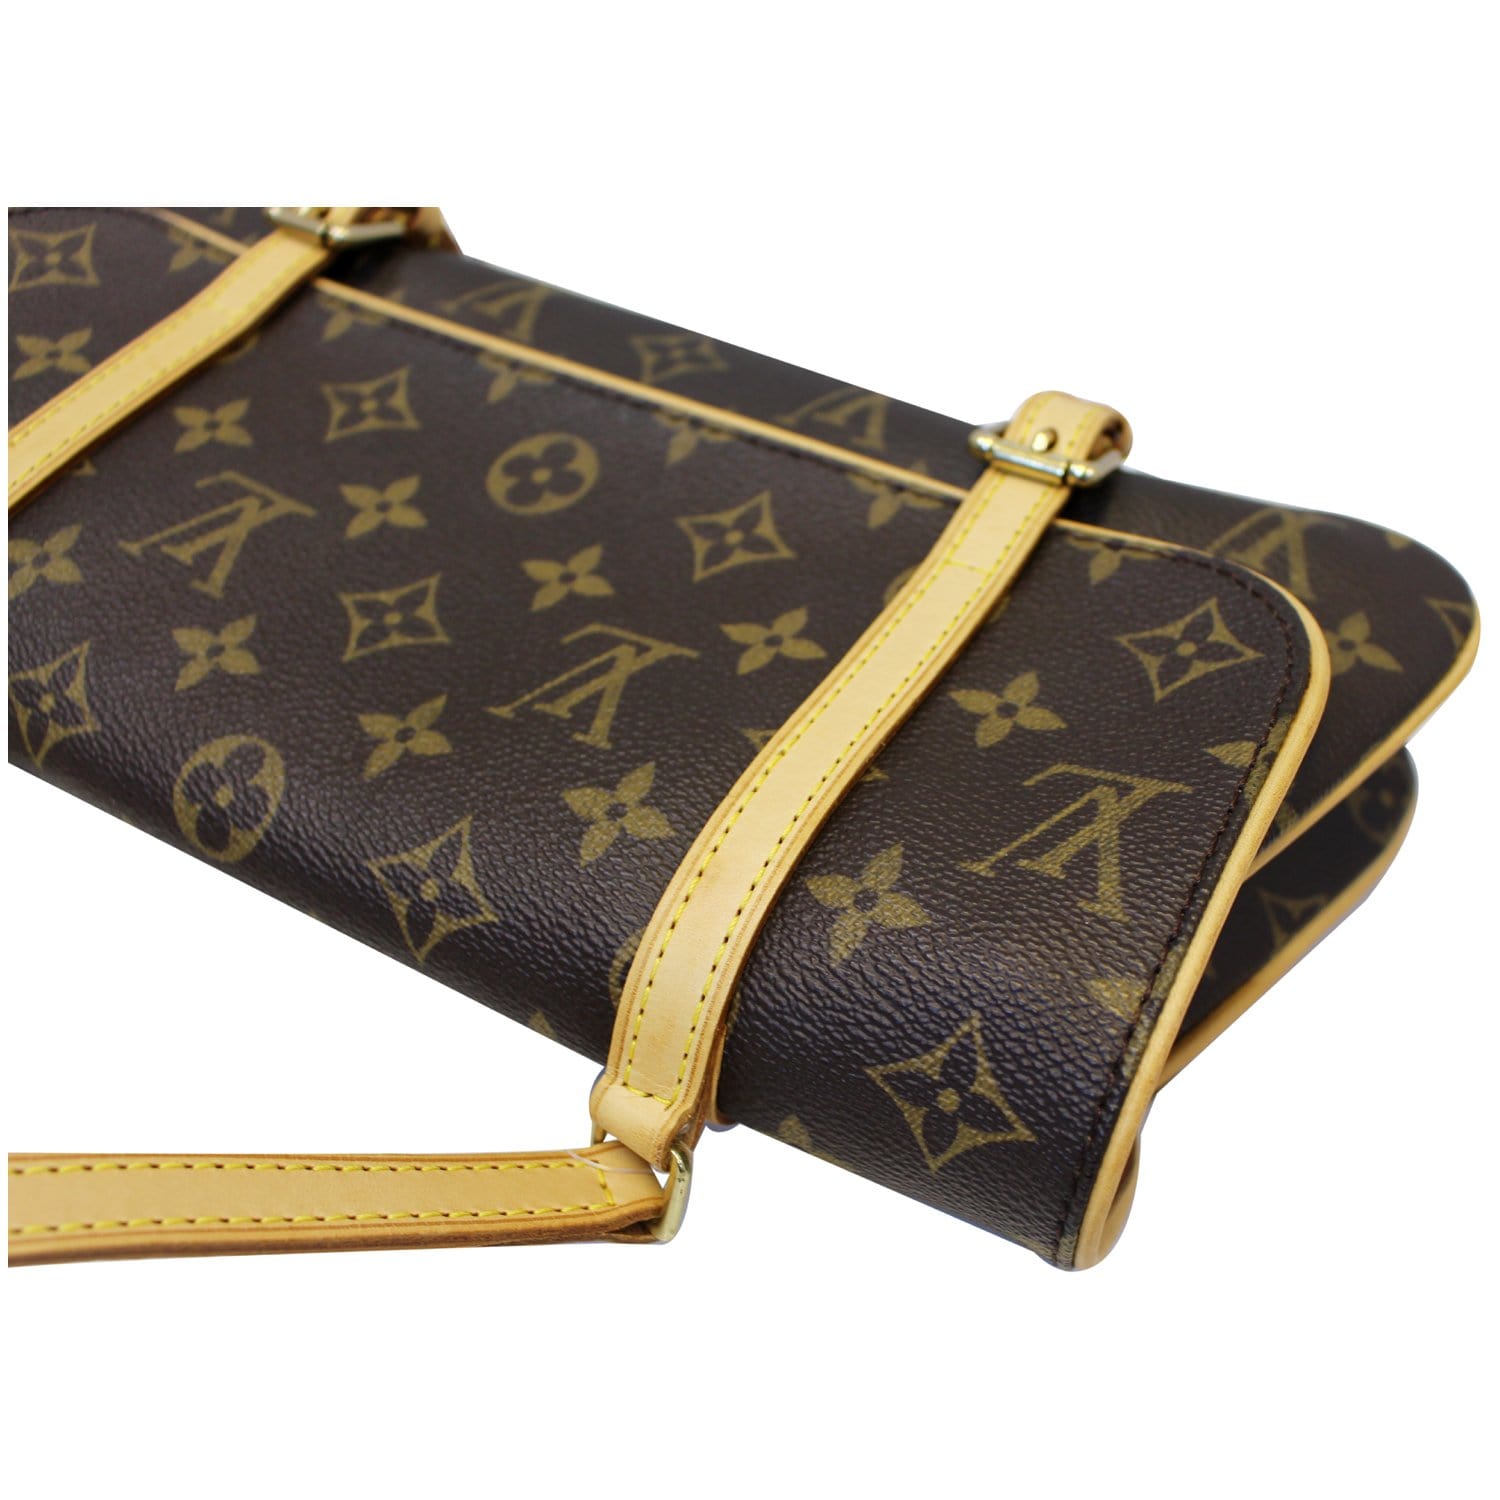 Louis Vuitton - Marelle mm Tote Bag - Black - Leather - Women - Luxury